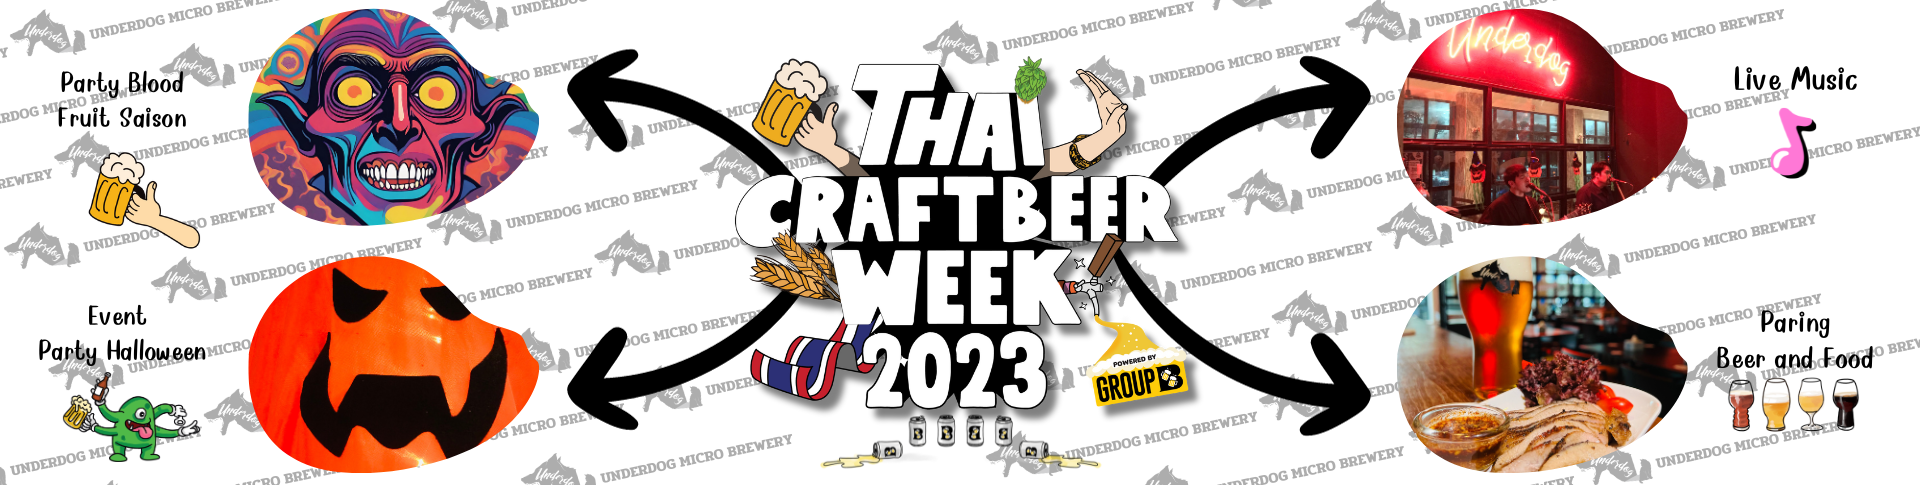 Underdog Halloween and Thai Craft Beer Week